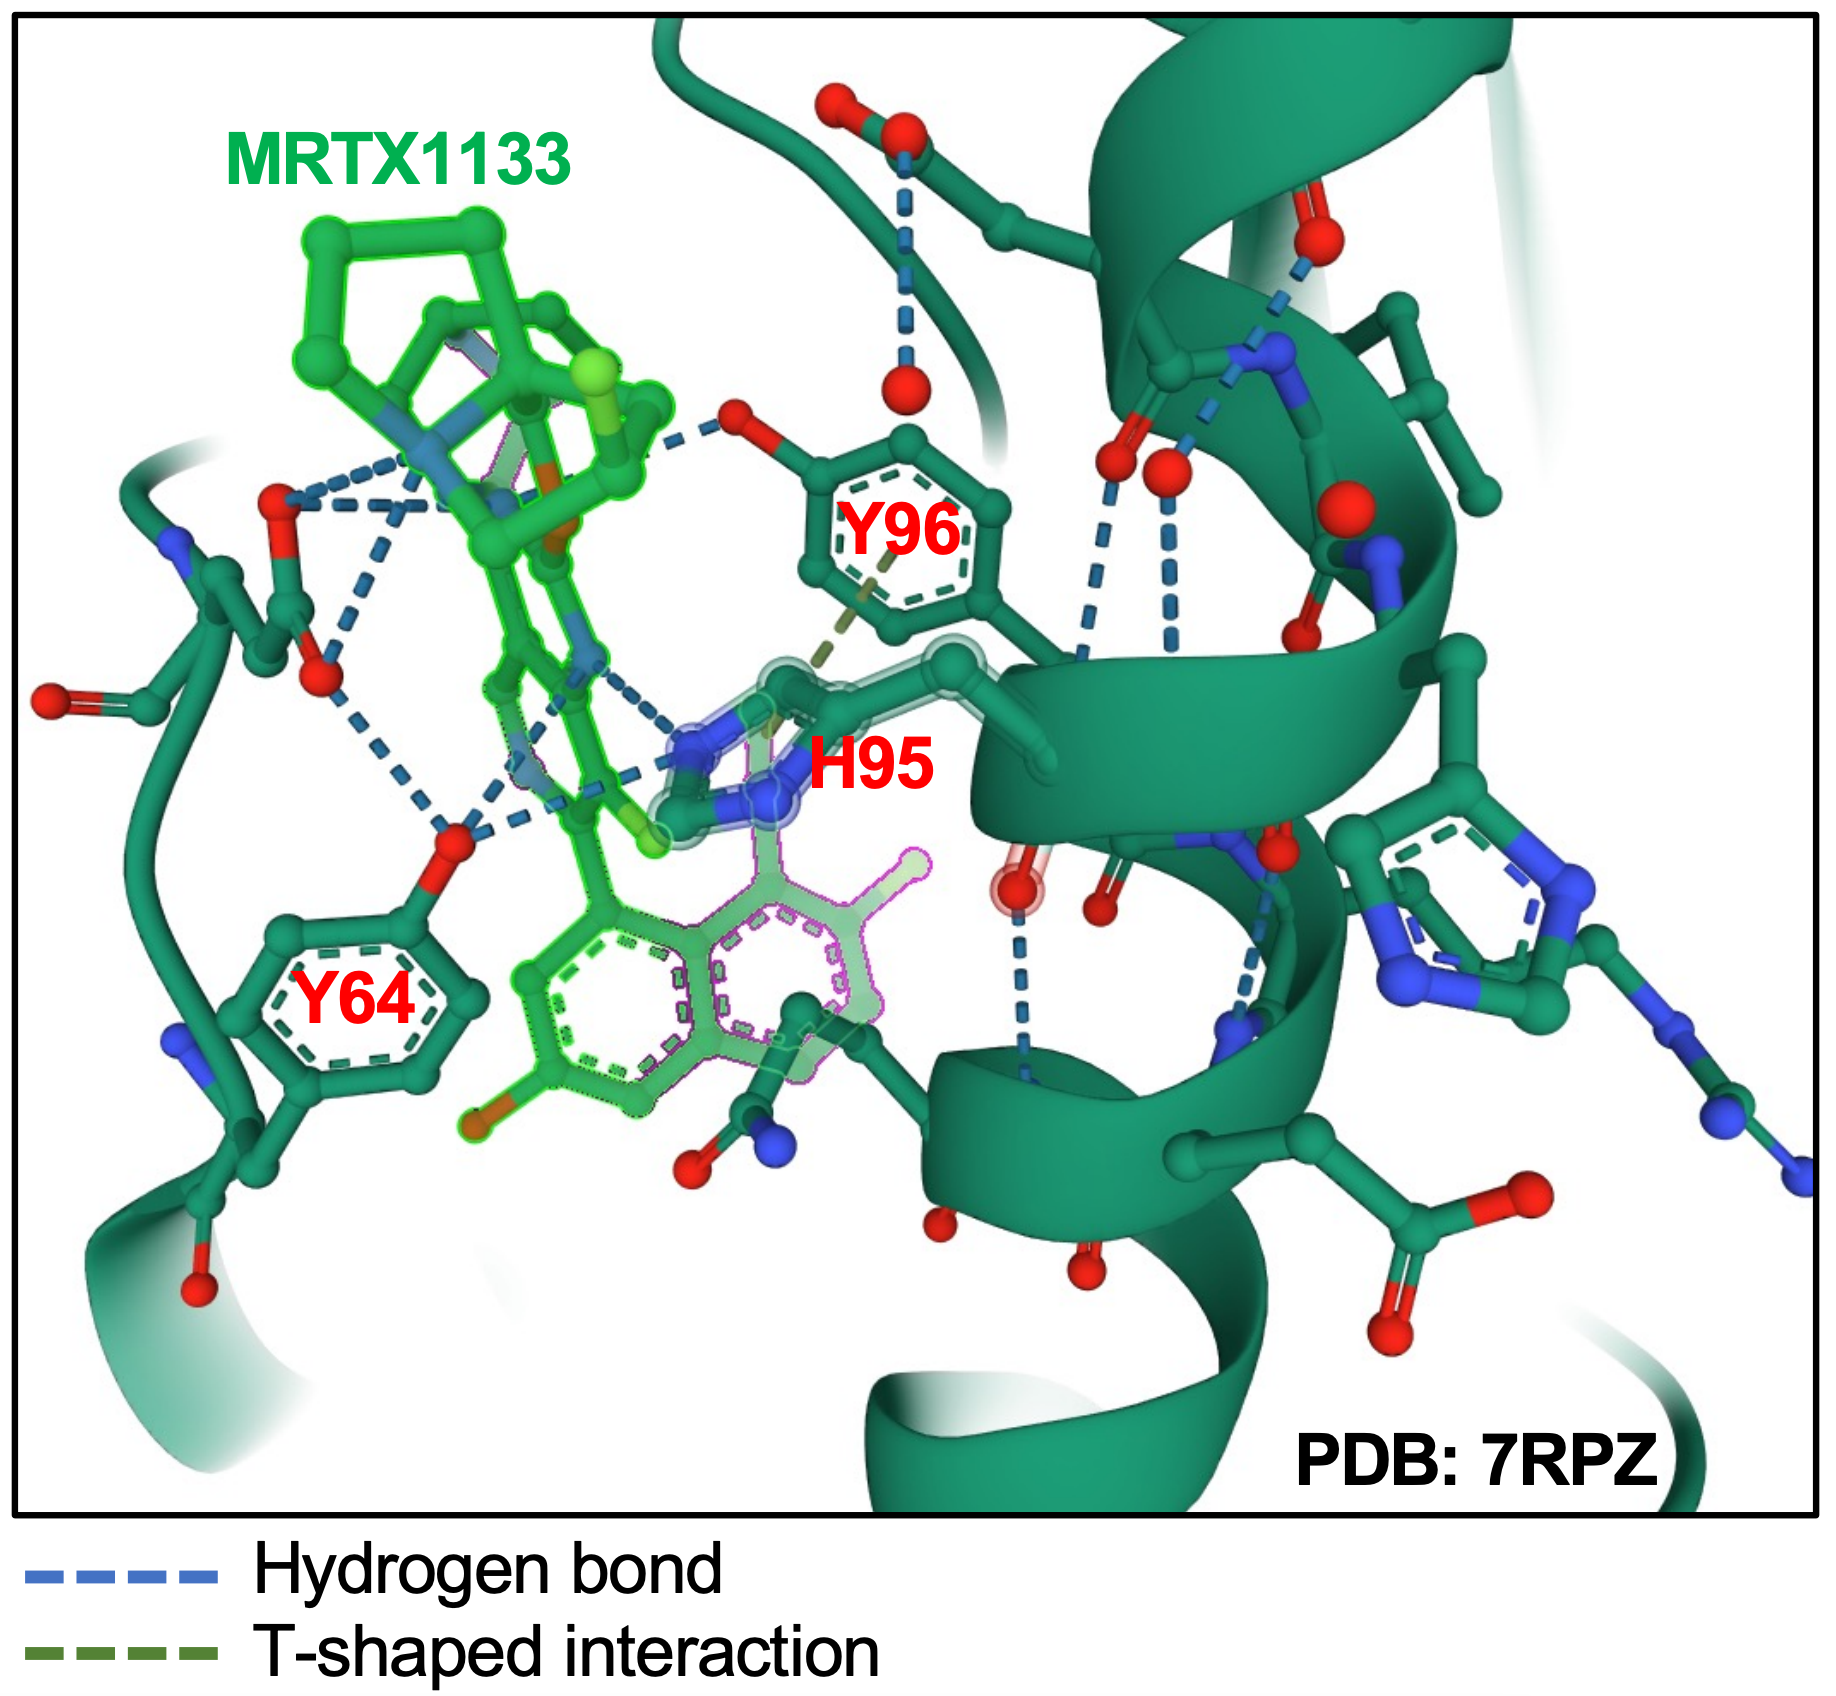 Schematic of KRAS G12D protein interaction with MRTX1133